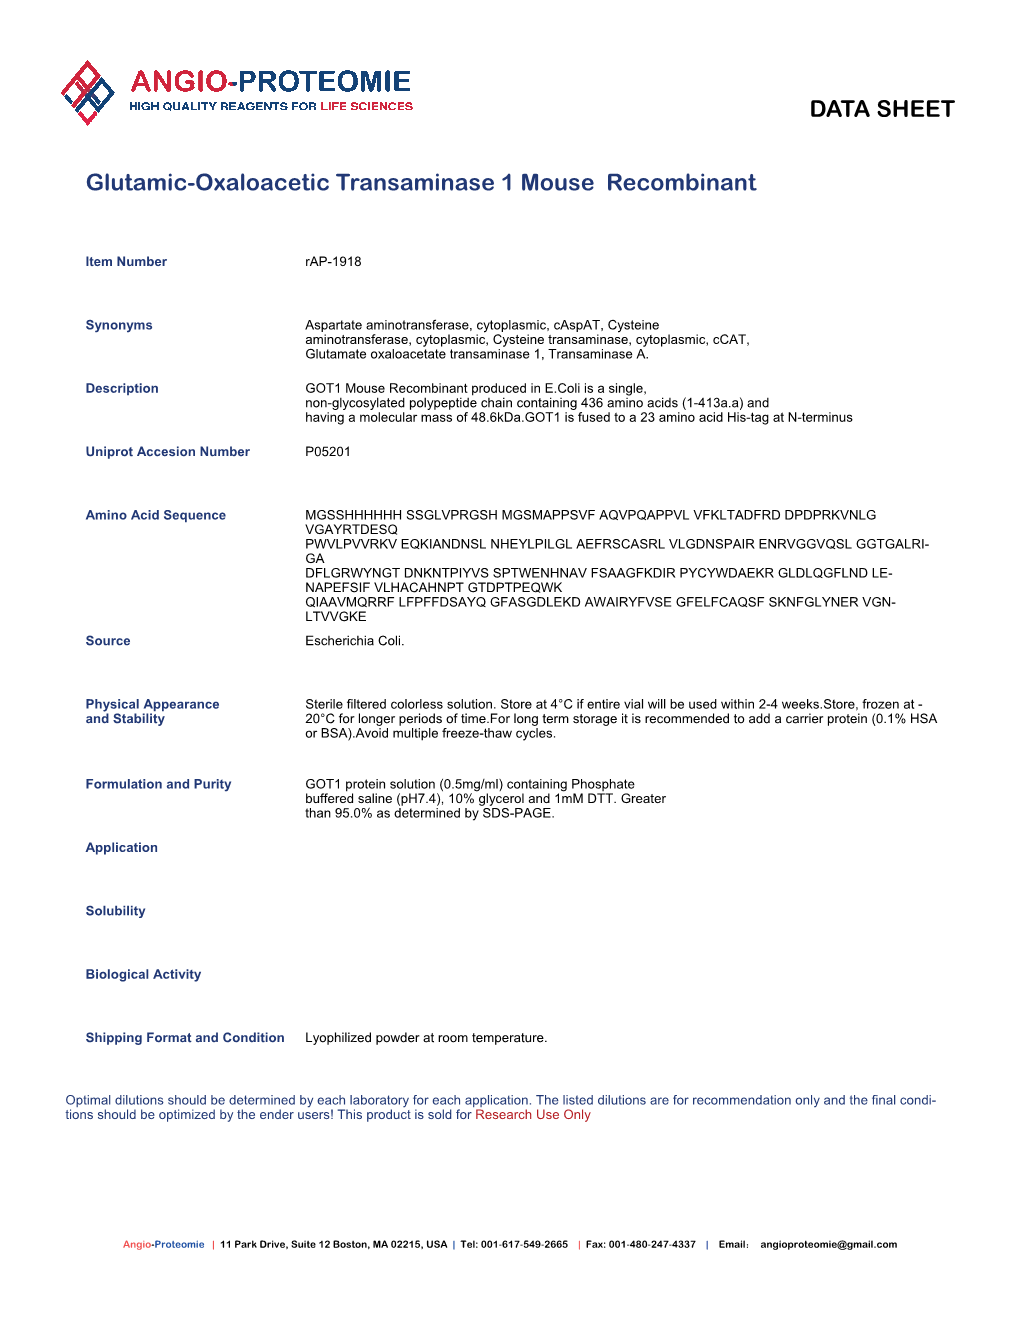 Rap-1918 Glutamic-Oxaloacetic Transaminase 1